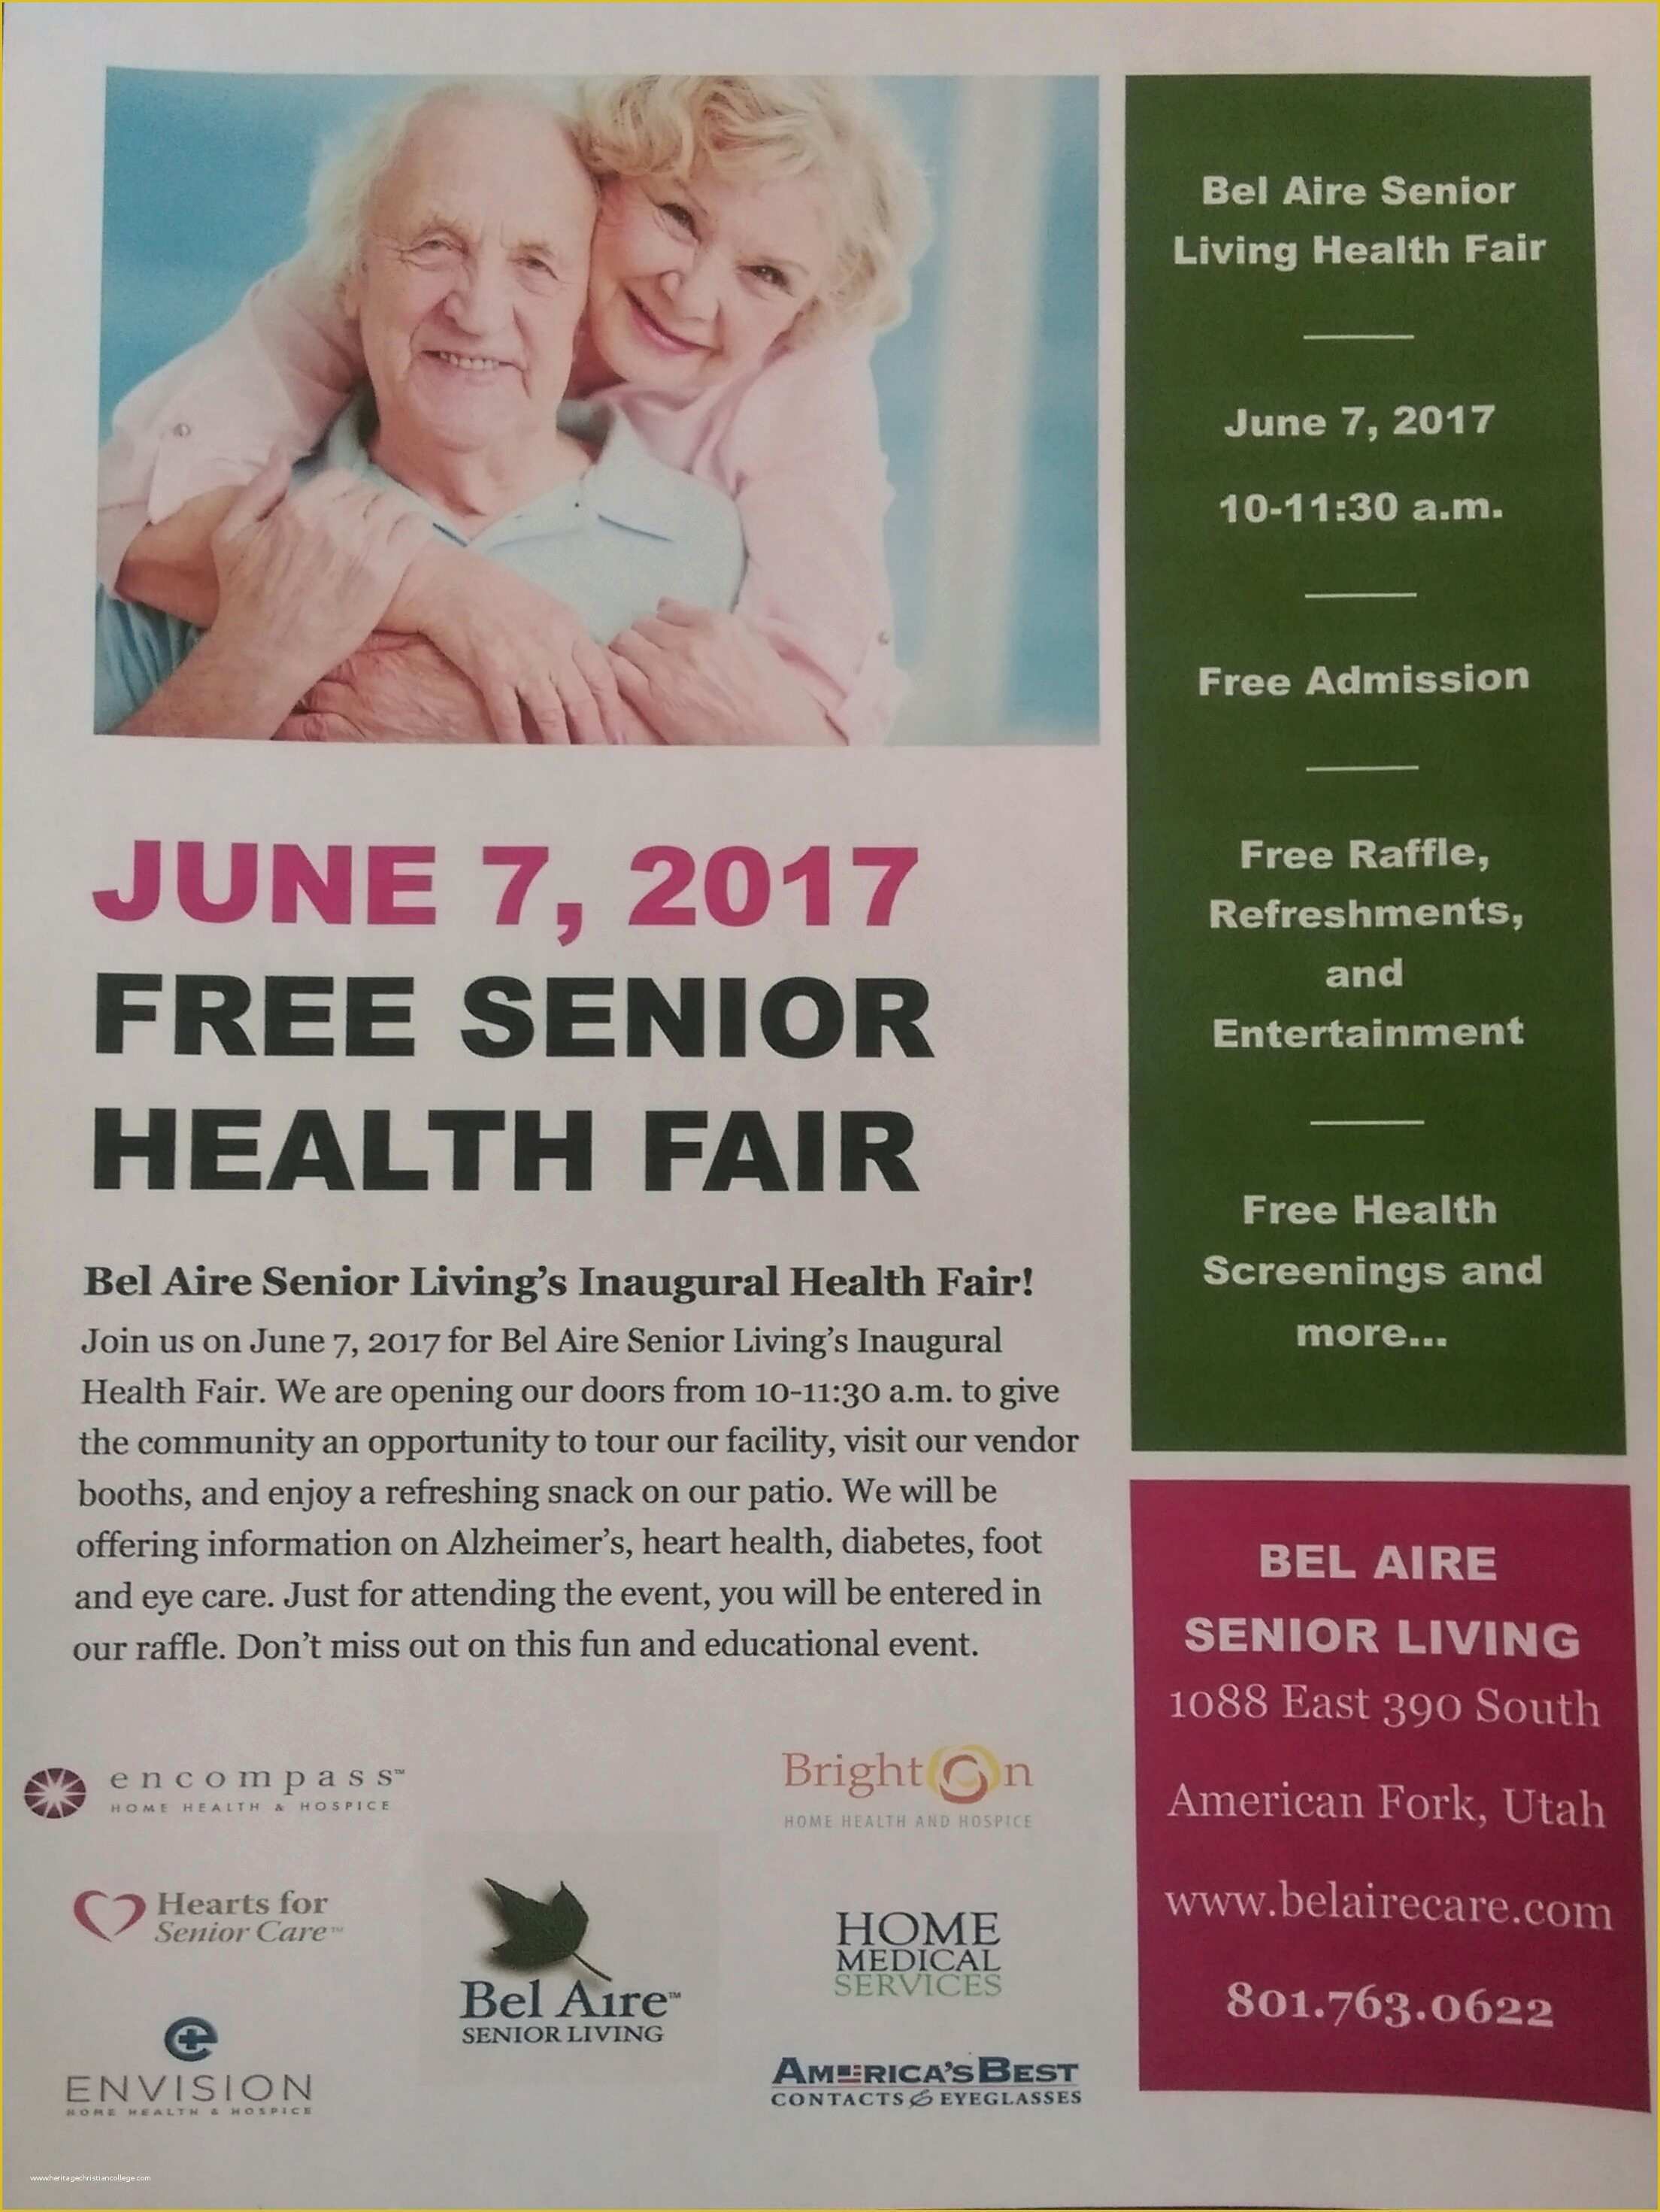 Health Fair Flyer Template Free Of Free Senior Health Fair at Bel Aire